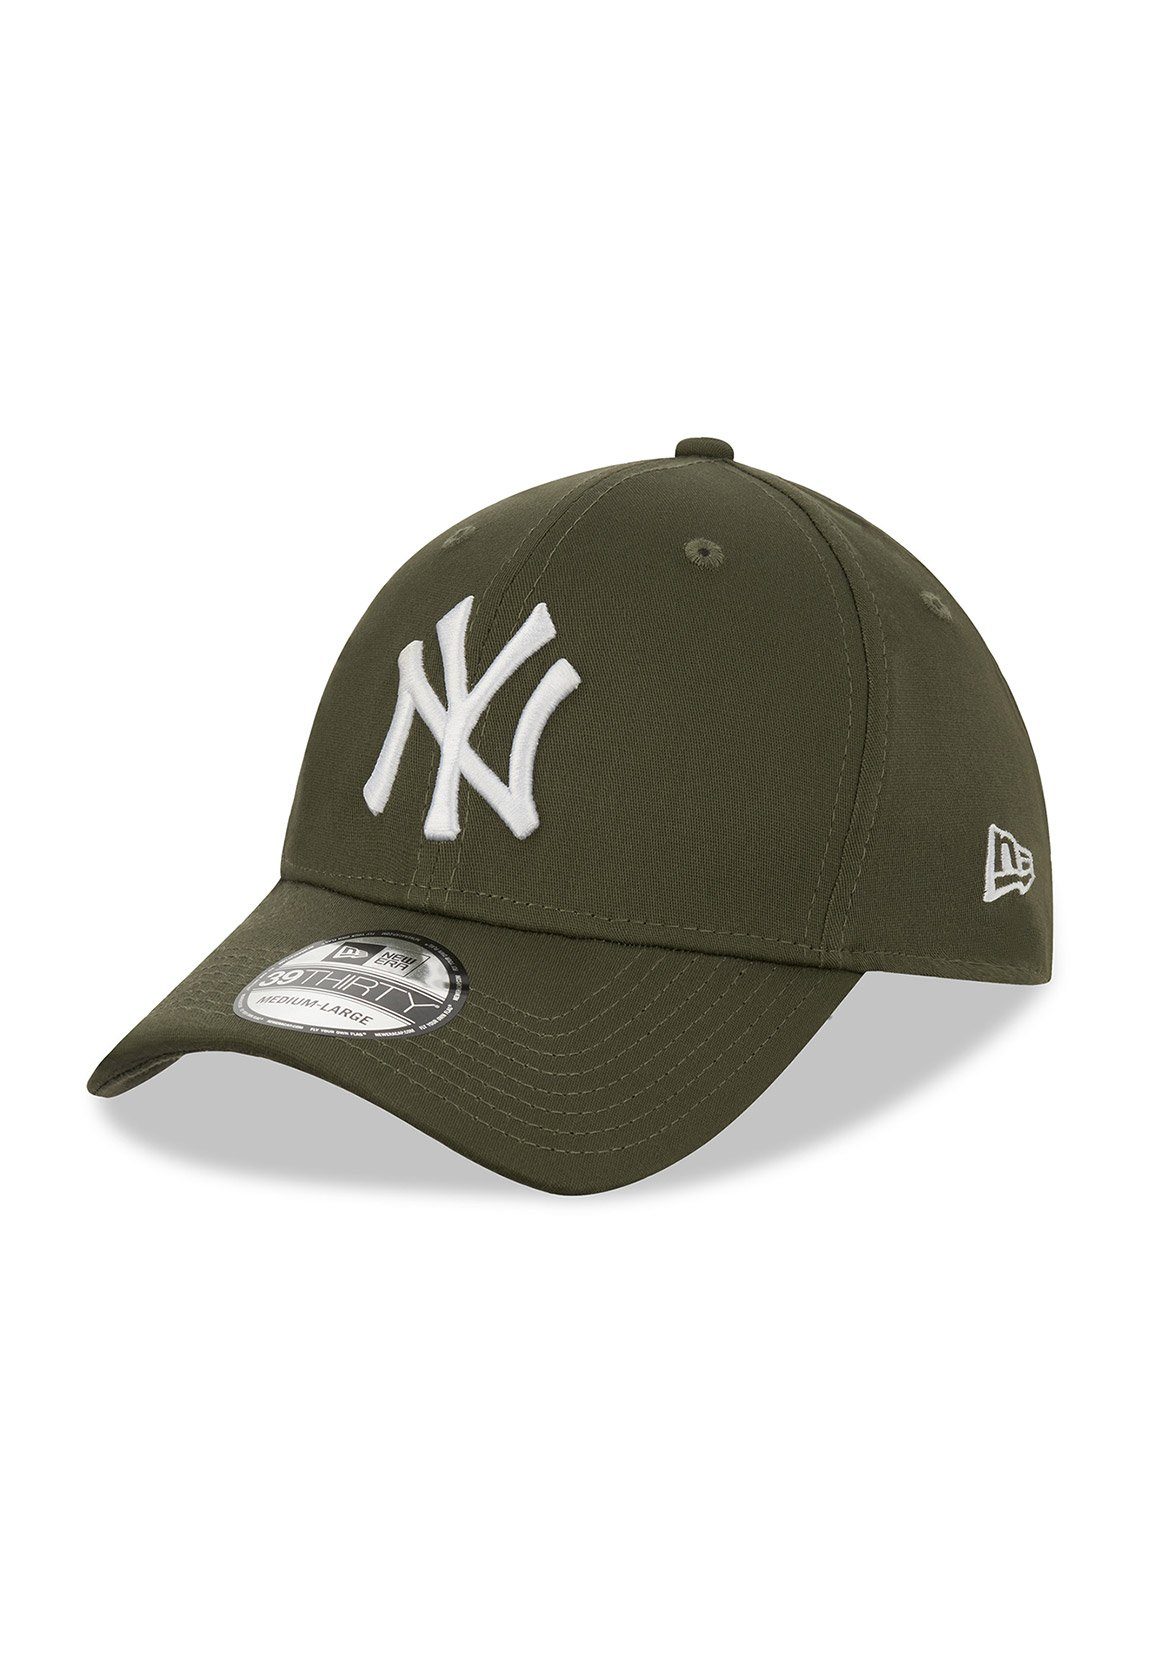 Baseball Era Era League Essential Cap New Weiß NY YANKEES New dunkeloliv Khaki Cap 39Thirty